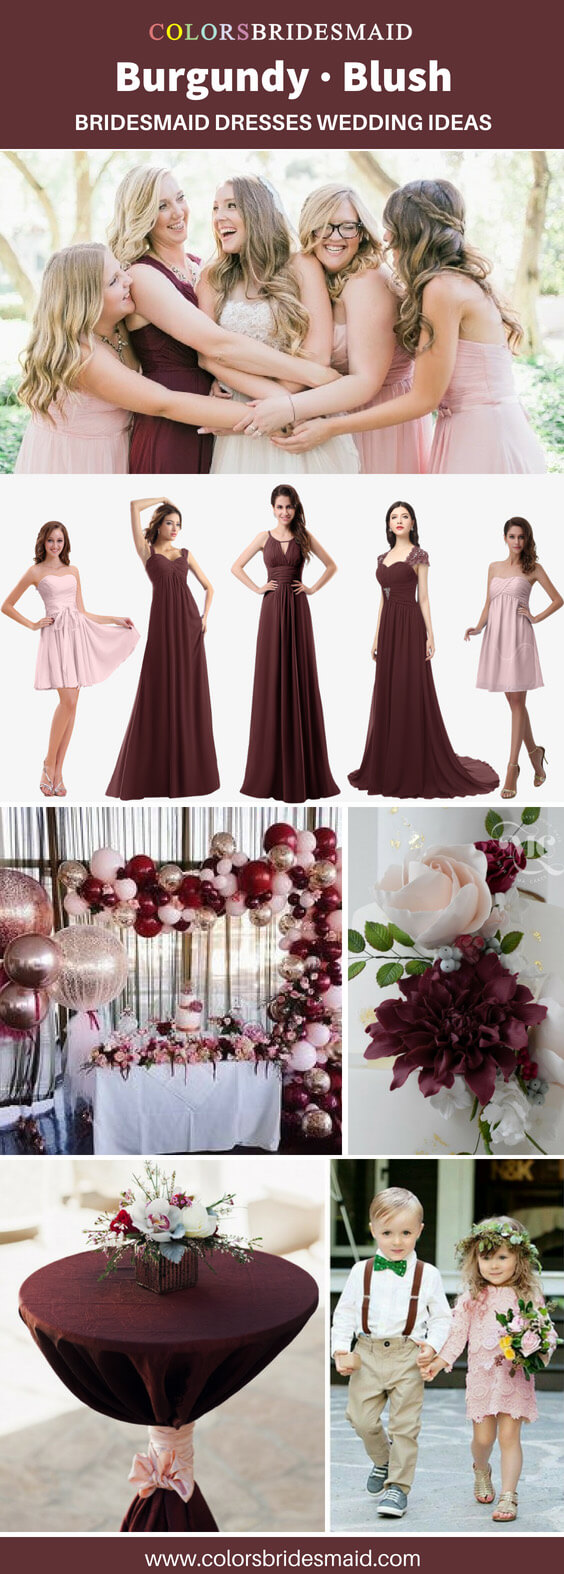 burgundy and blush bridesmaid dresses